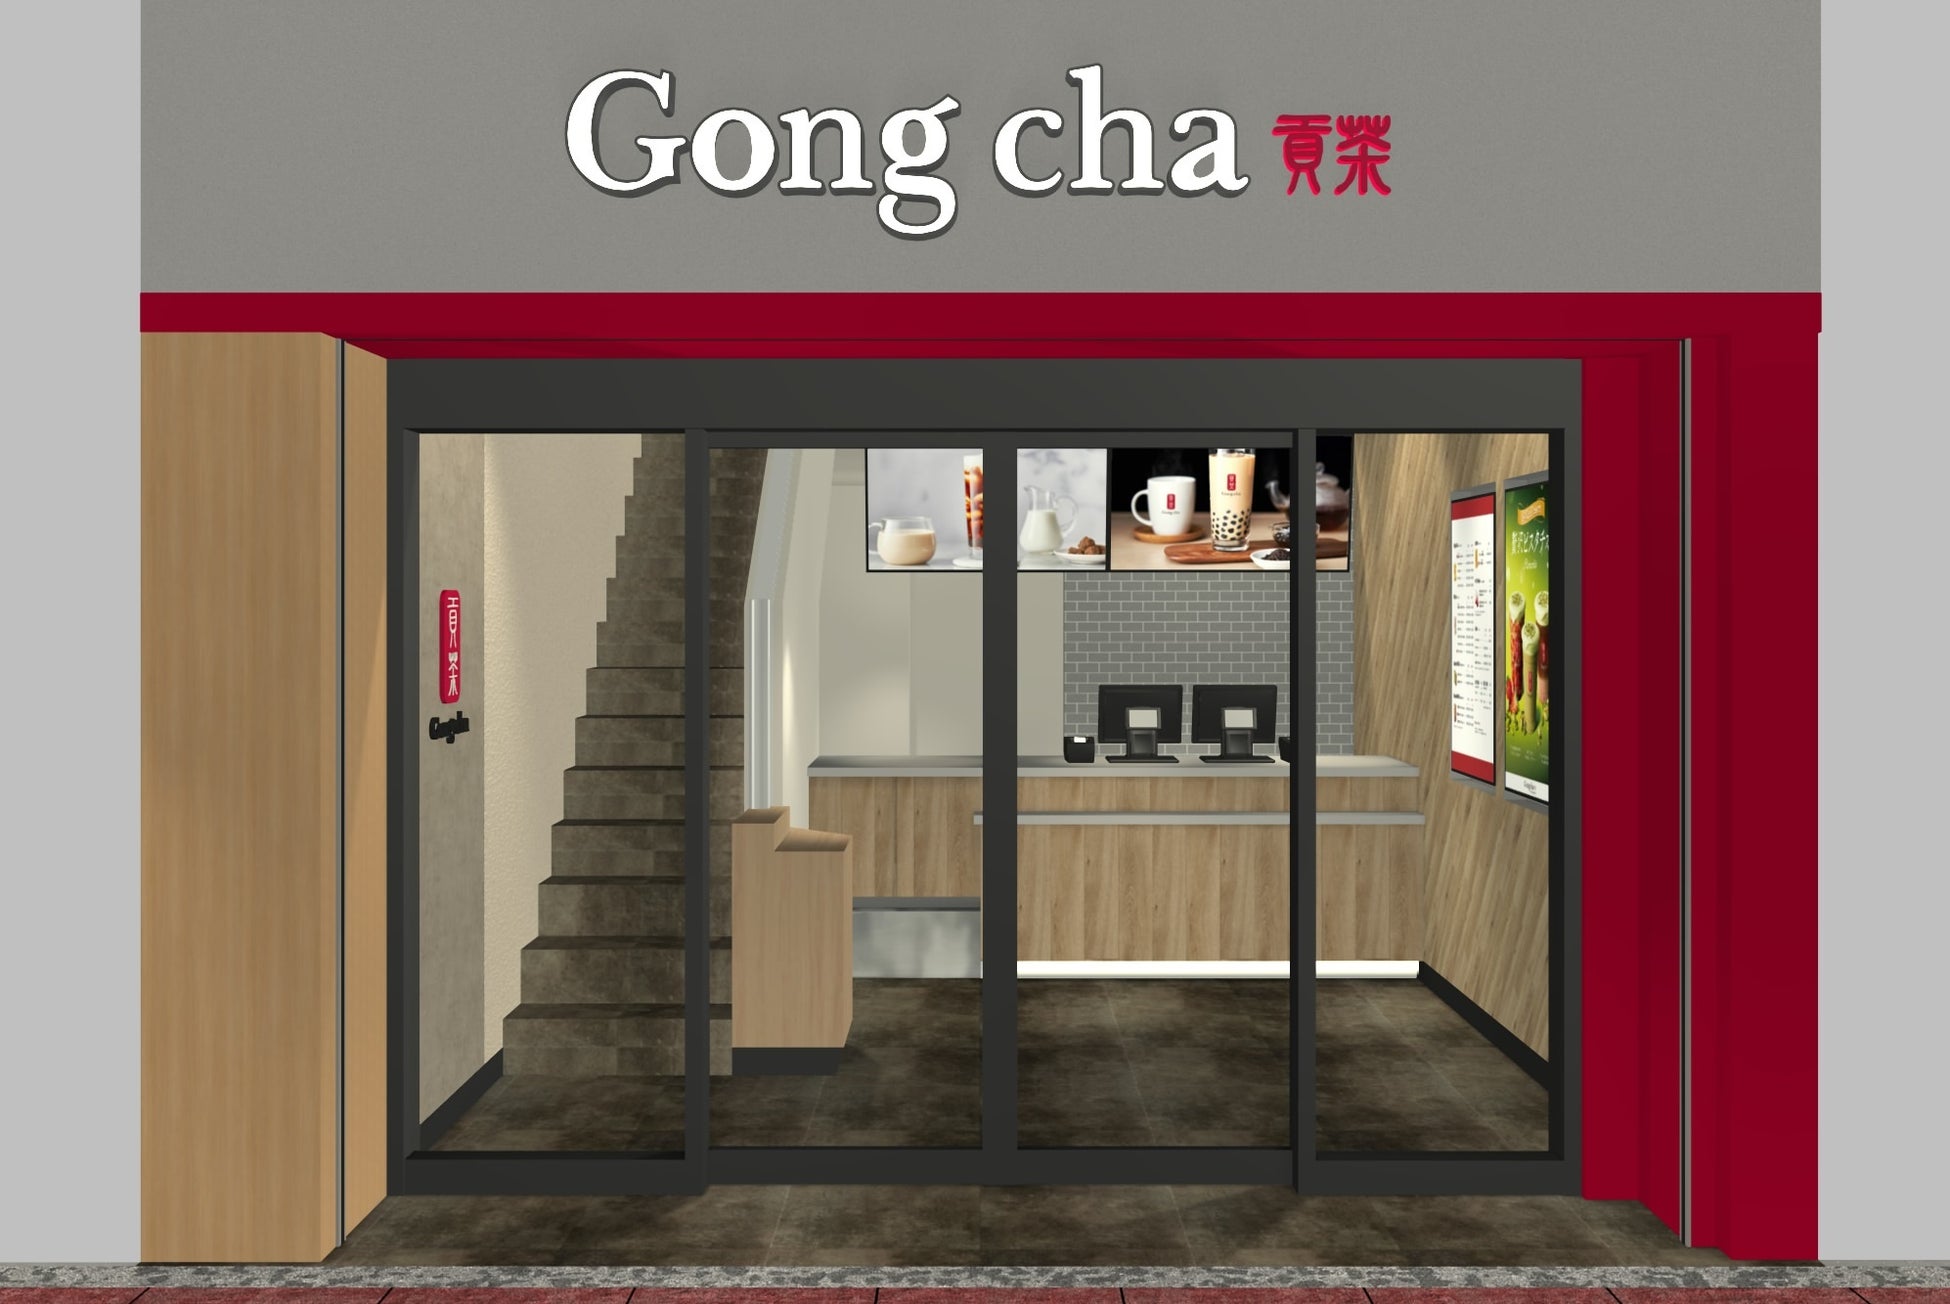 Gong cha、歴史を紡ぐ京都の中心地・河原町へ初出店　京都河原町蛸薬師店